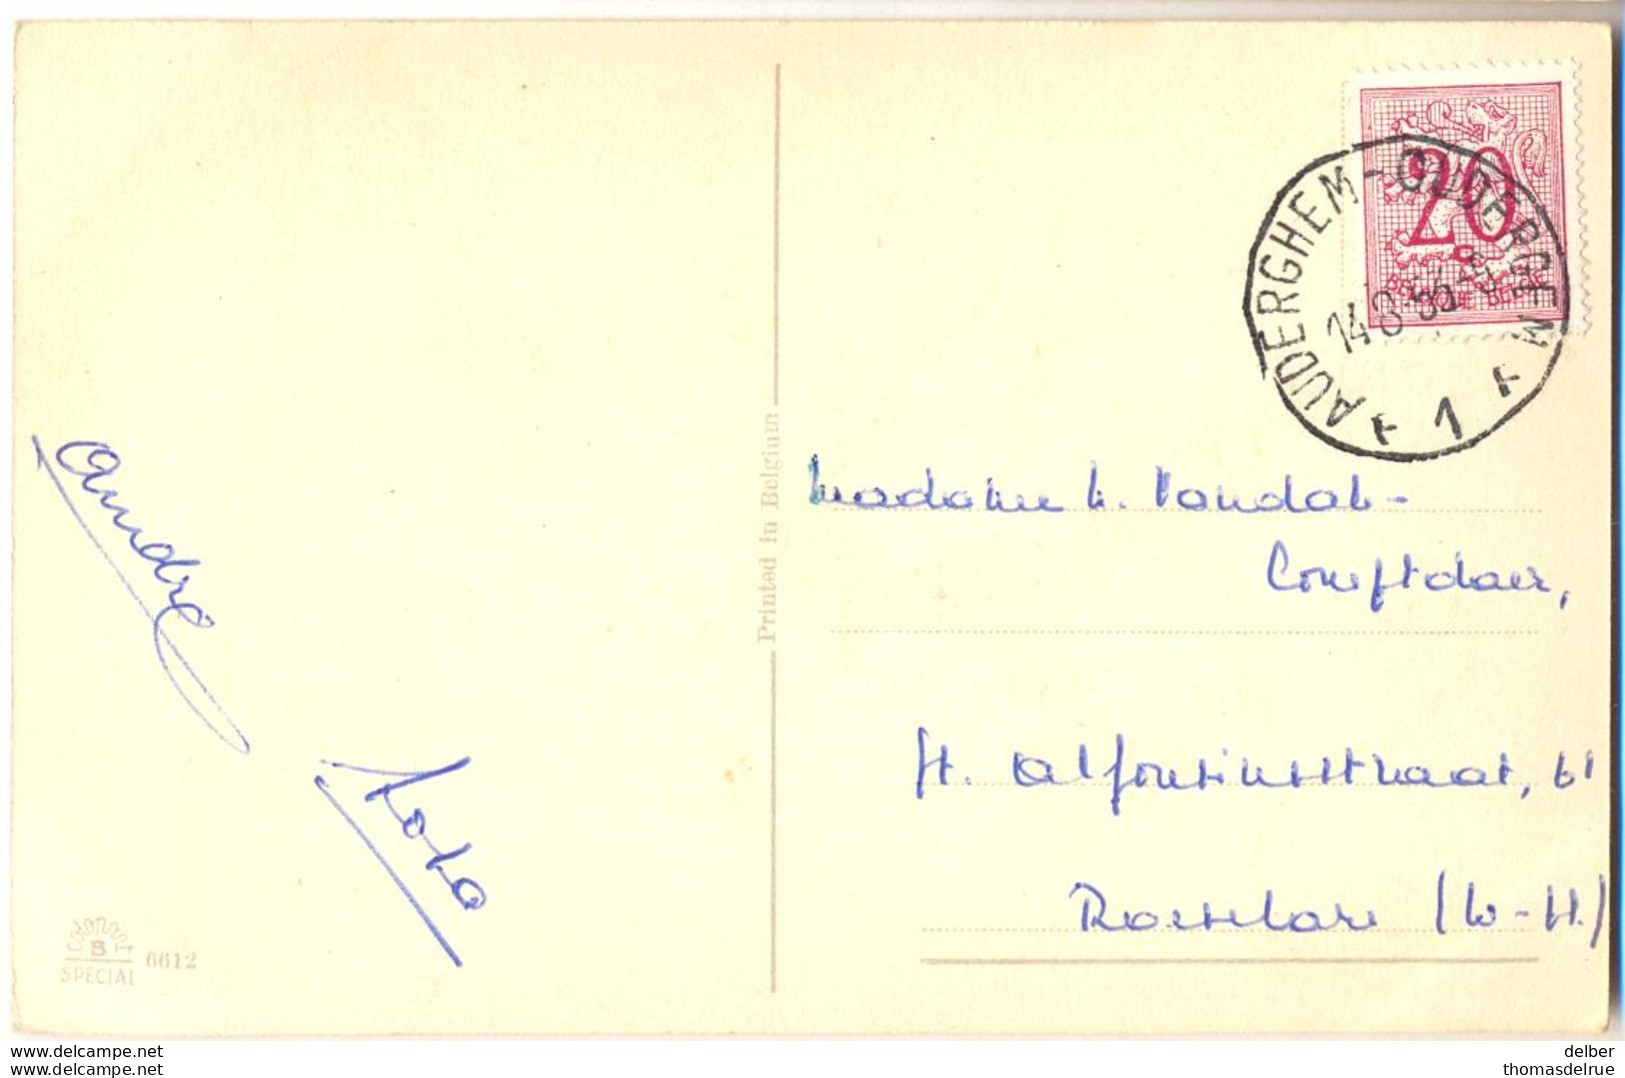 Nx320: N°851: AUDERGHEM-OUDERGEM A1A 14-8-53 > Roeselare  .. Bonne Fête - 1951-1975 Heraldic Lion